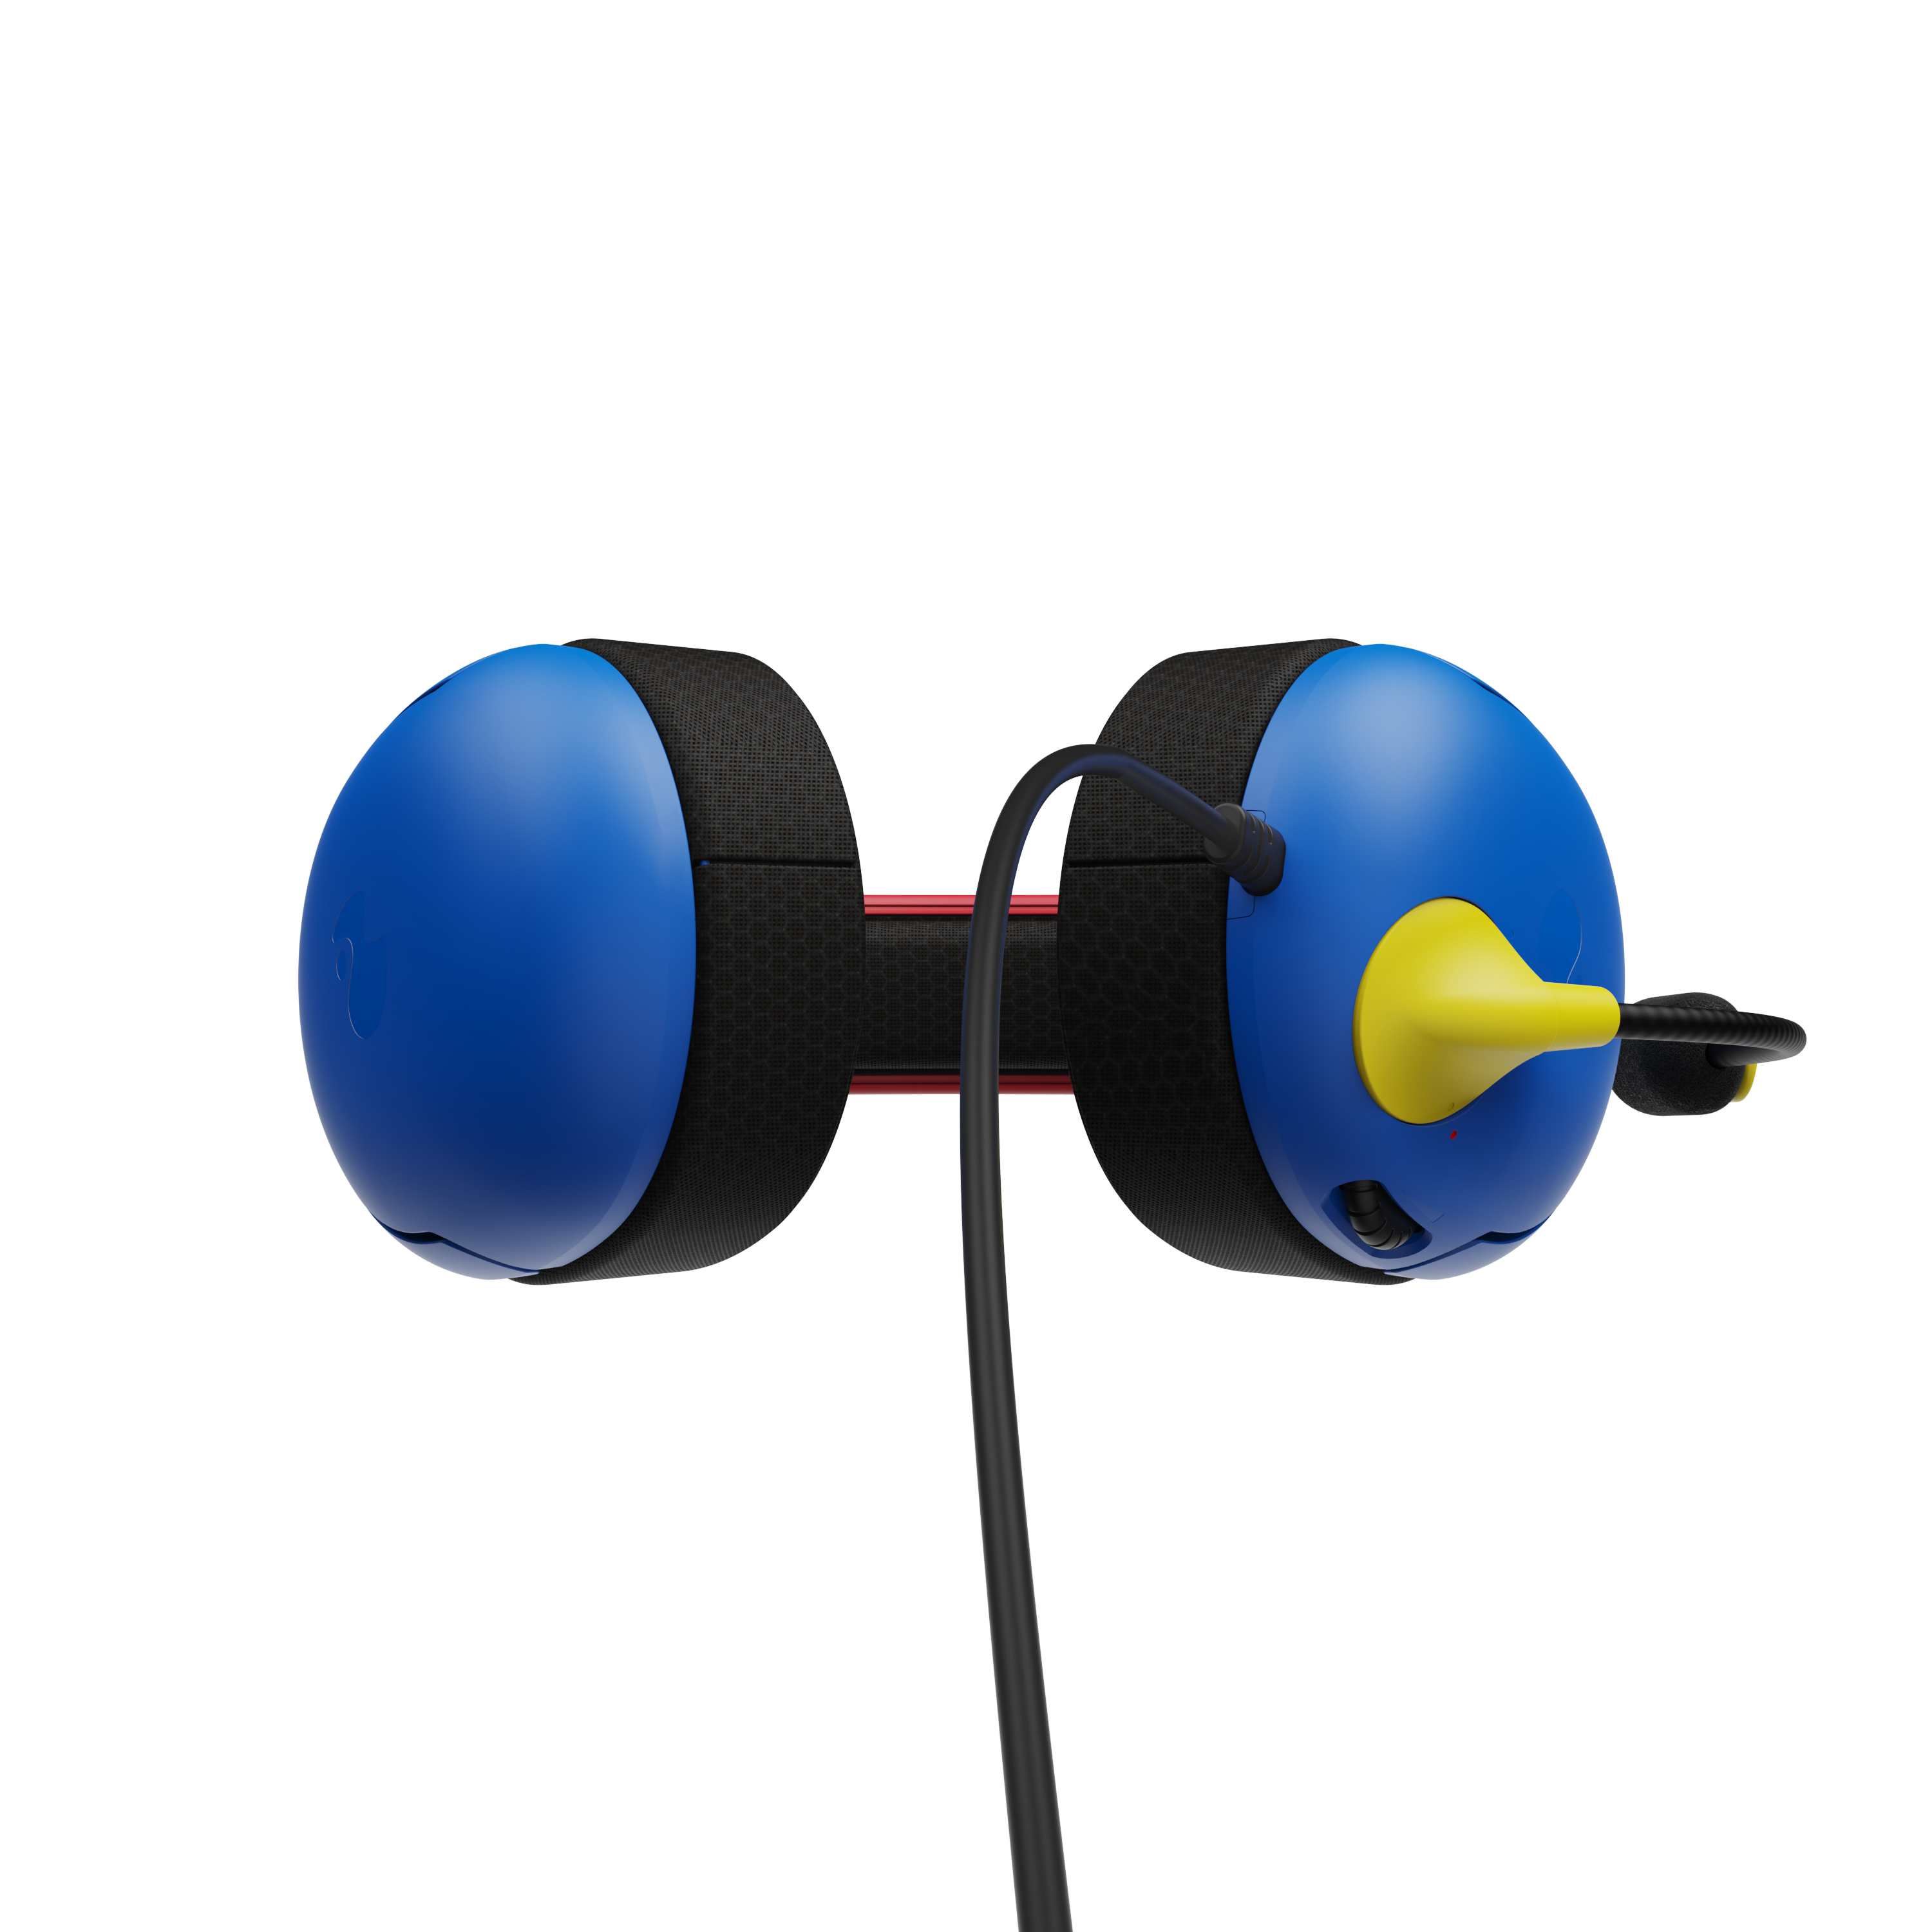 PDP LLC Headset: Dash, Headset Mehrfarbig Kabelgebundenes On-ear AIRLITE Mario Gaming